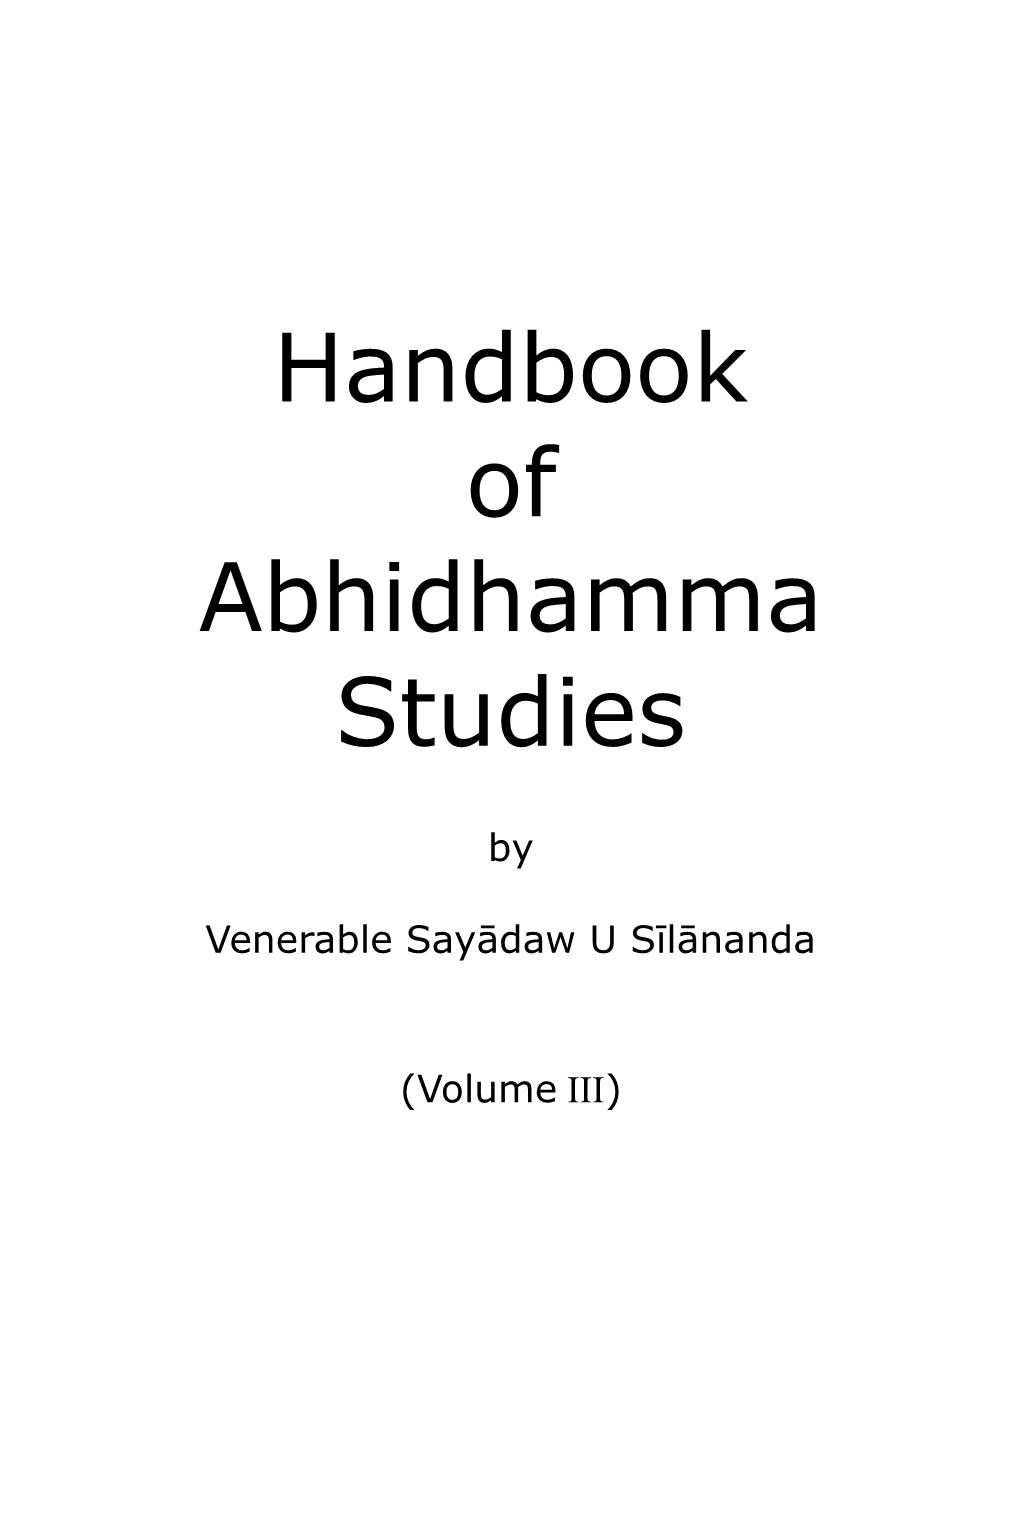 Handbook of Abhidhamma Studies